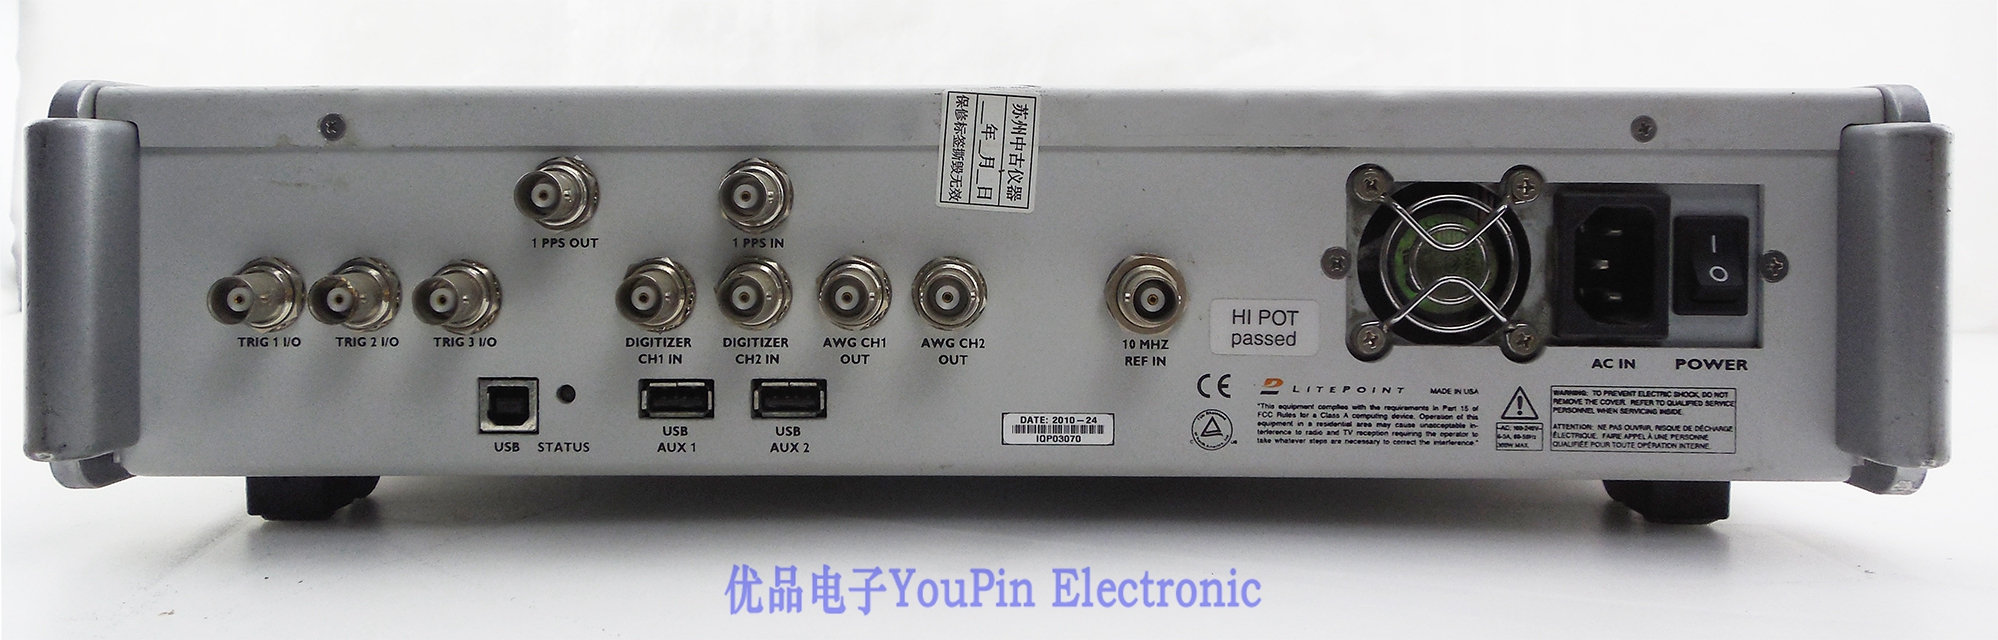 Litepoint IQ2010 Multi-communication connectivity test system